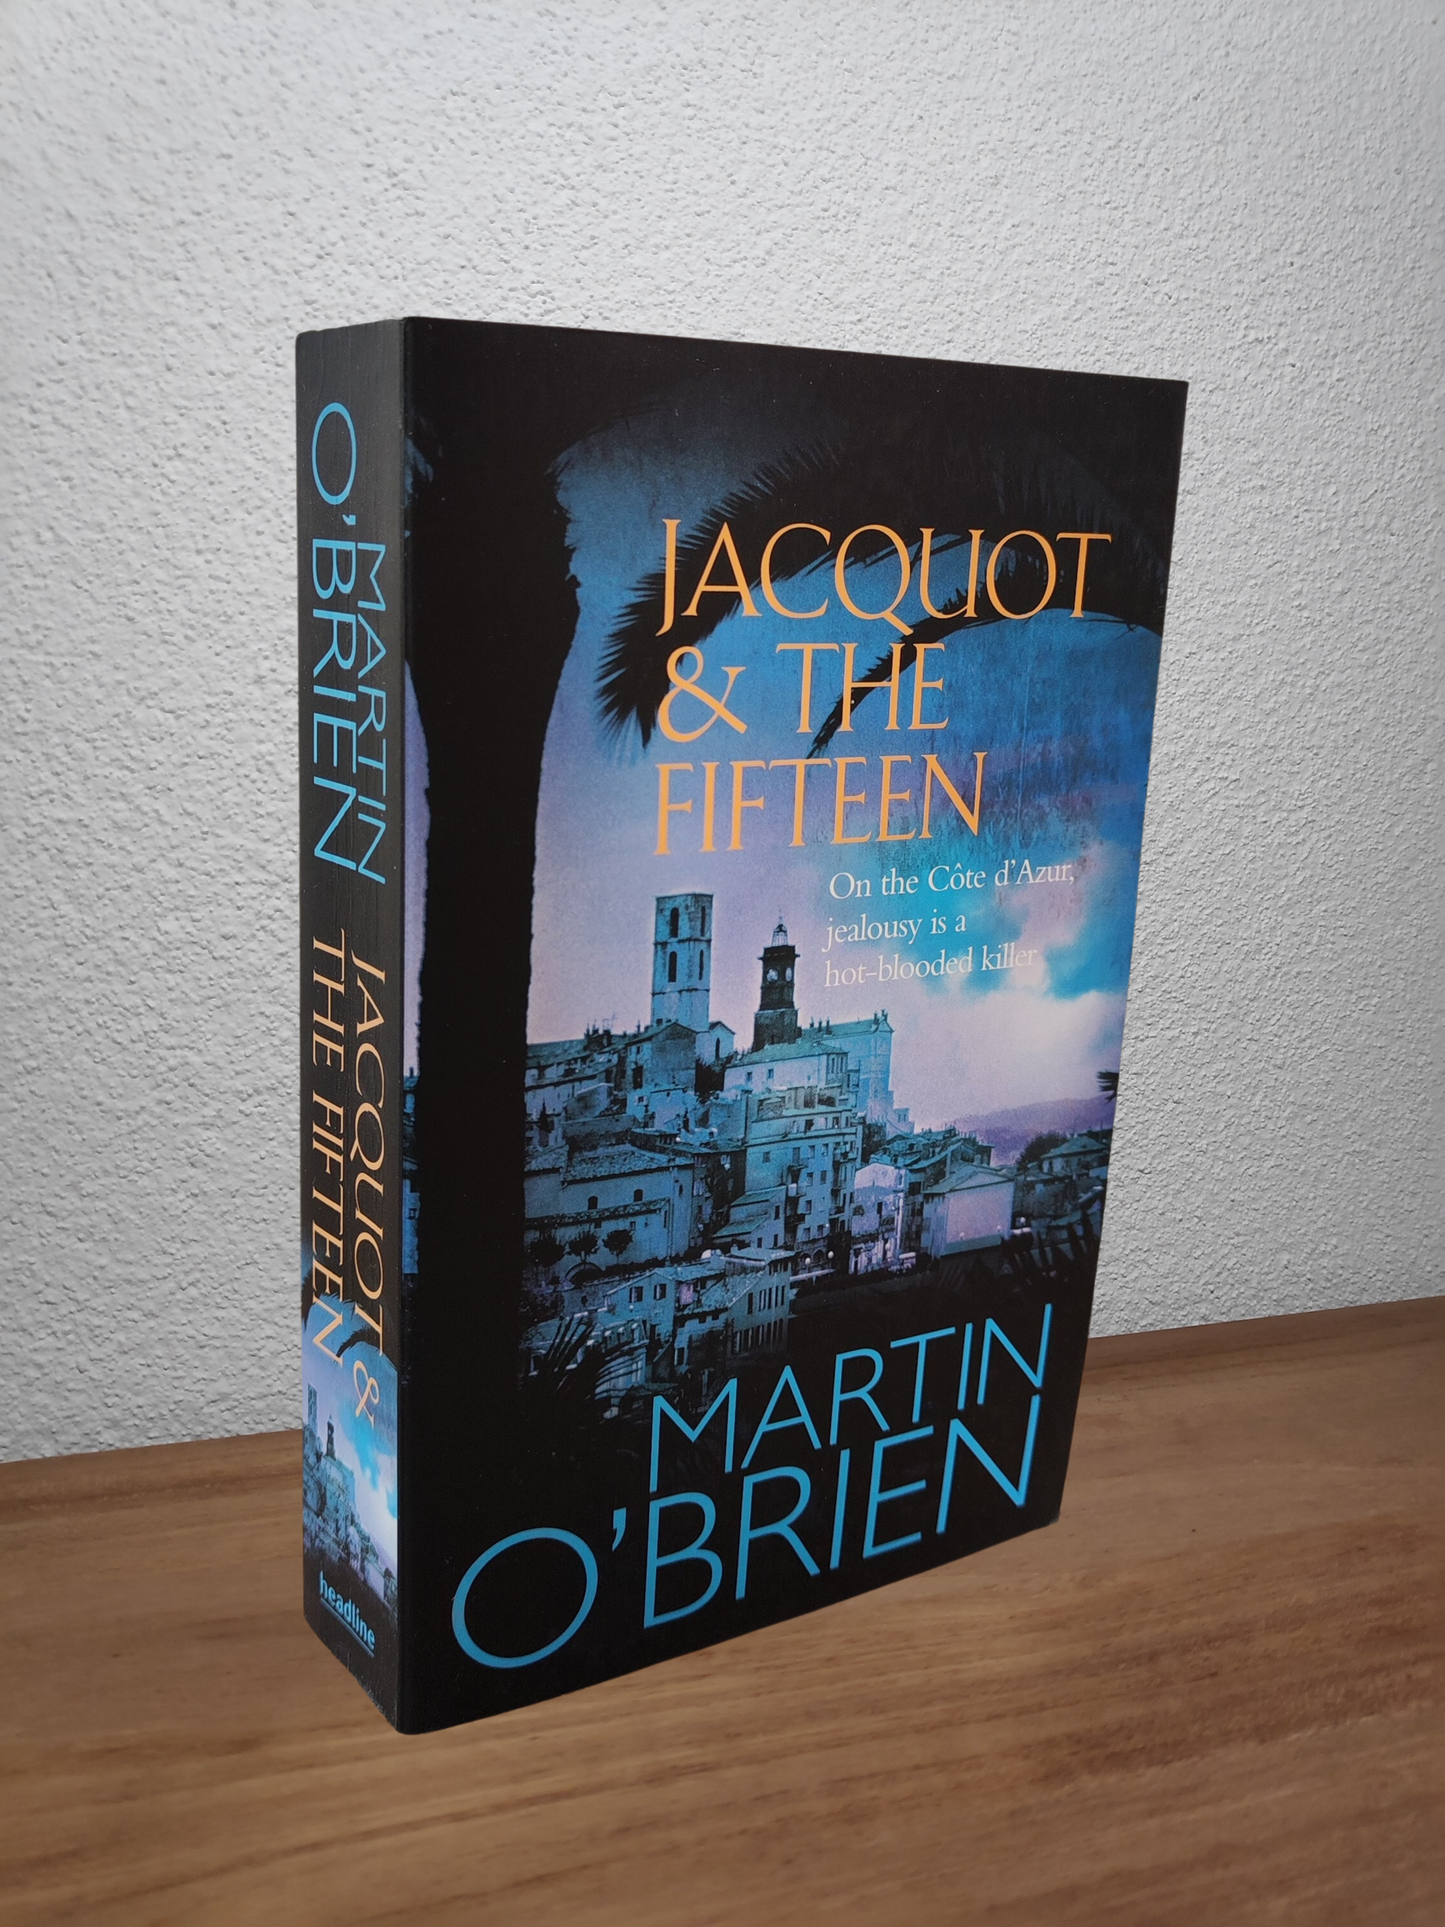 Martin O'Brien -Jacquot and the Fifteen (Daniel Jacquot #4)